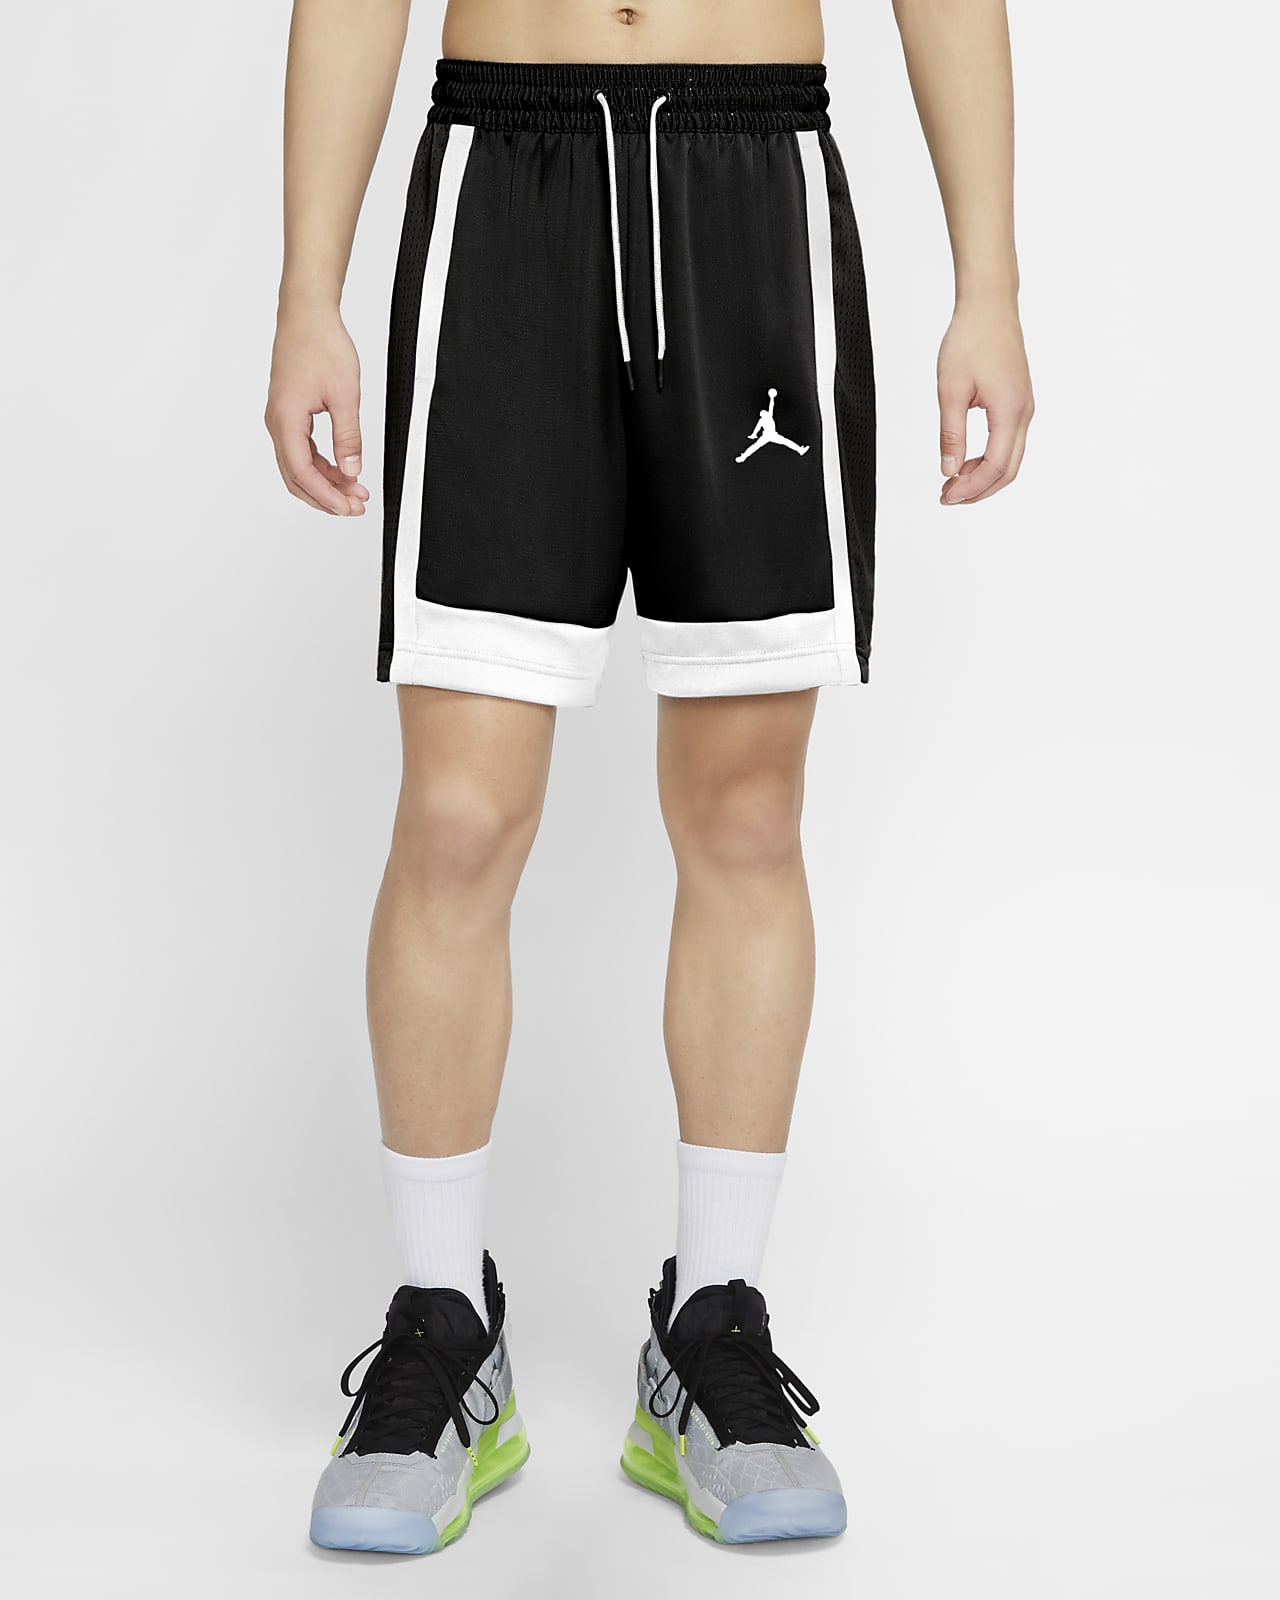 jordan mesh basketball shorts